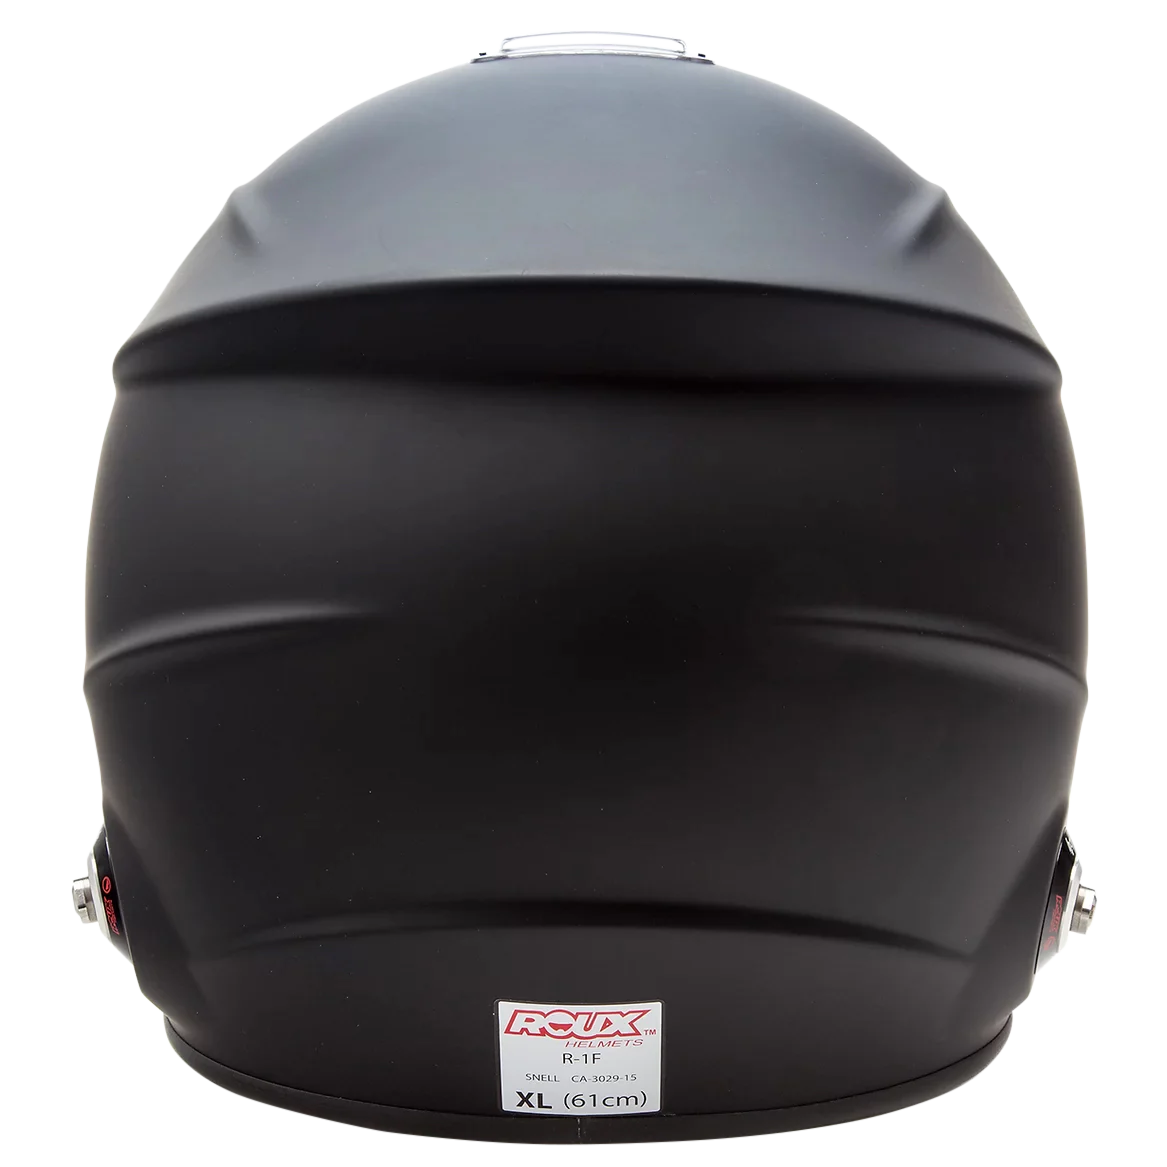 Back view of fiberglass r-1 helmet 6